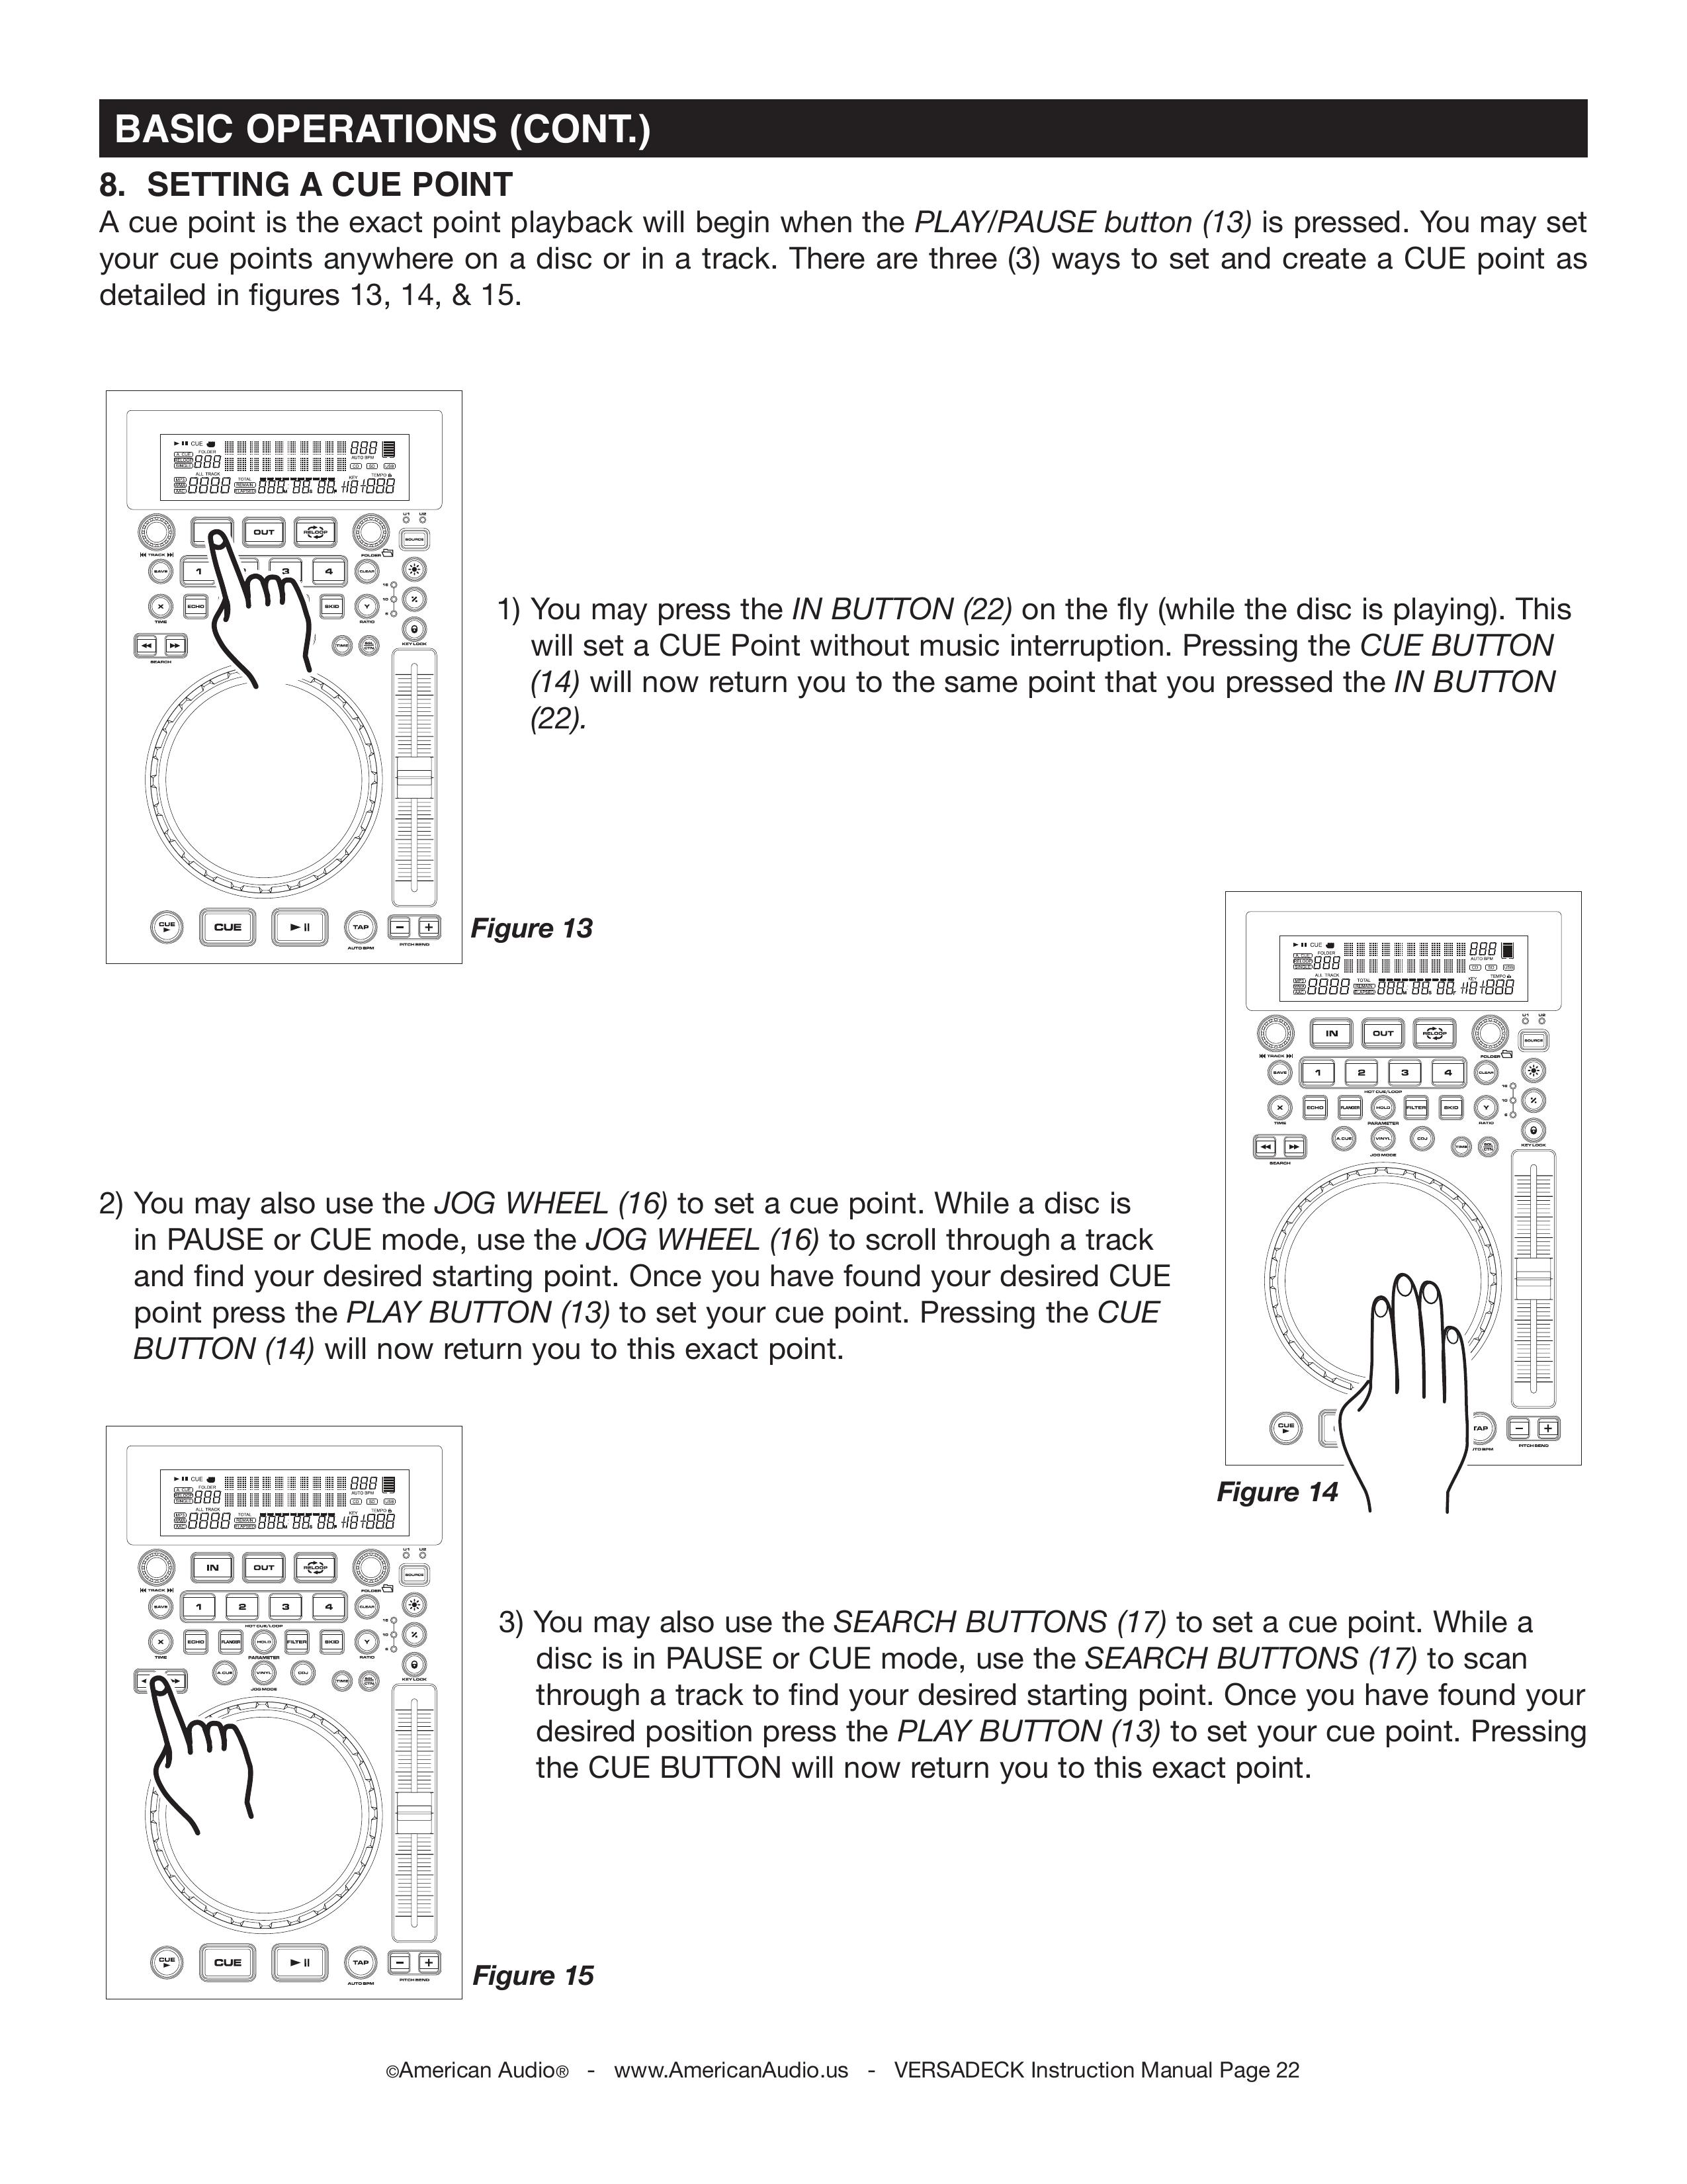 American Audio Versadeck DJ Equipment User Manual (Page 22)